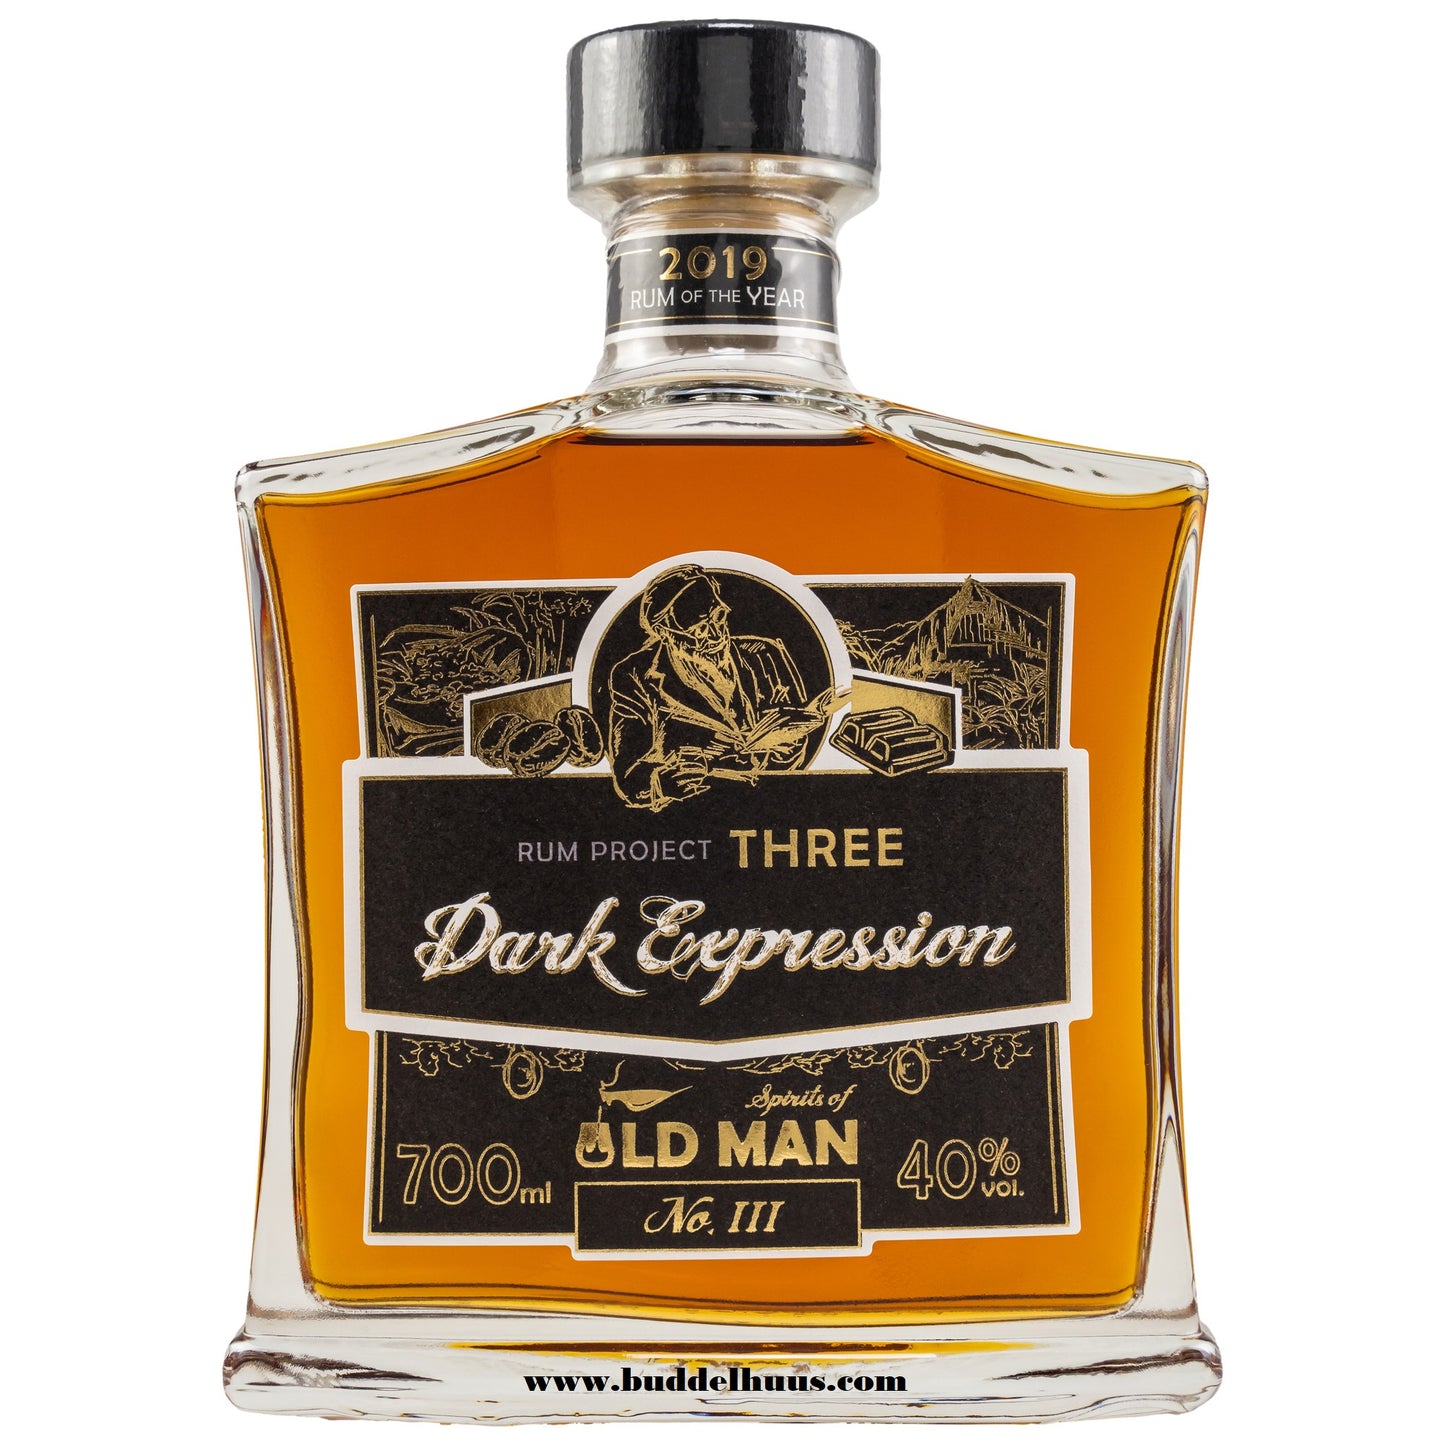 Spirit of Old Man Rum Project Three - Dark Expression